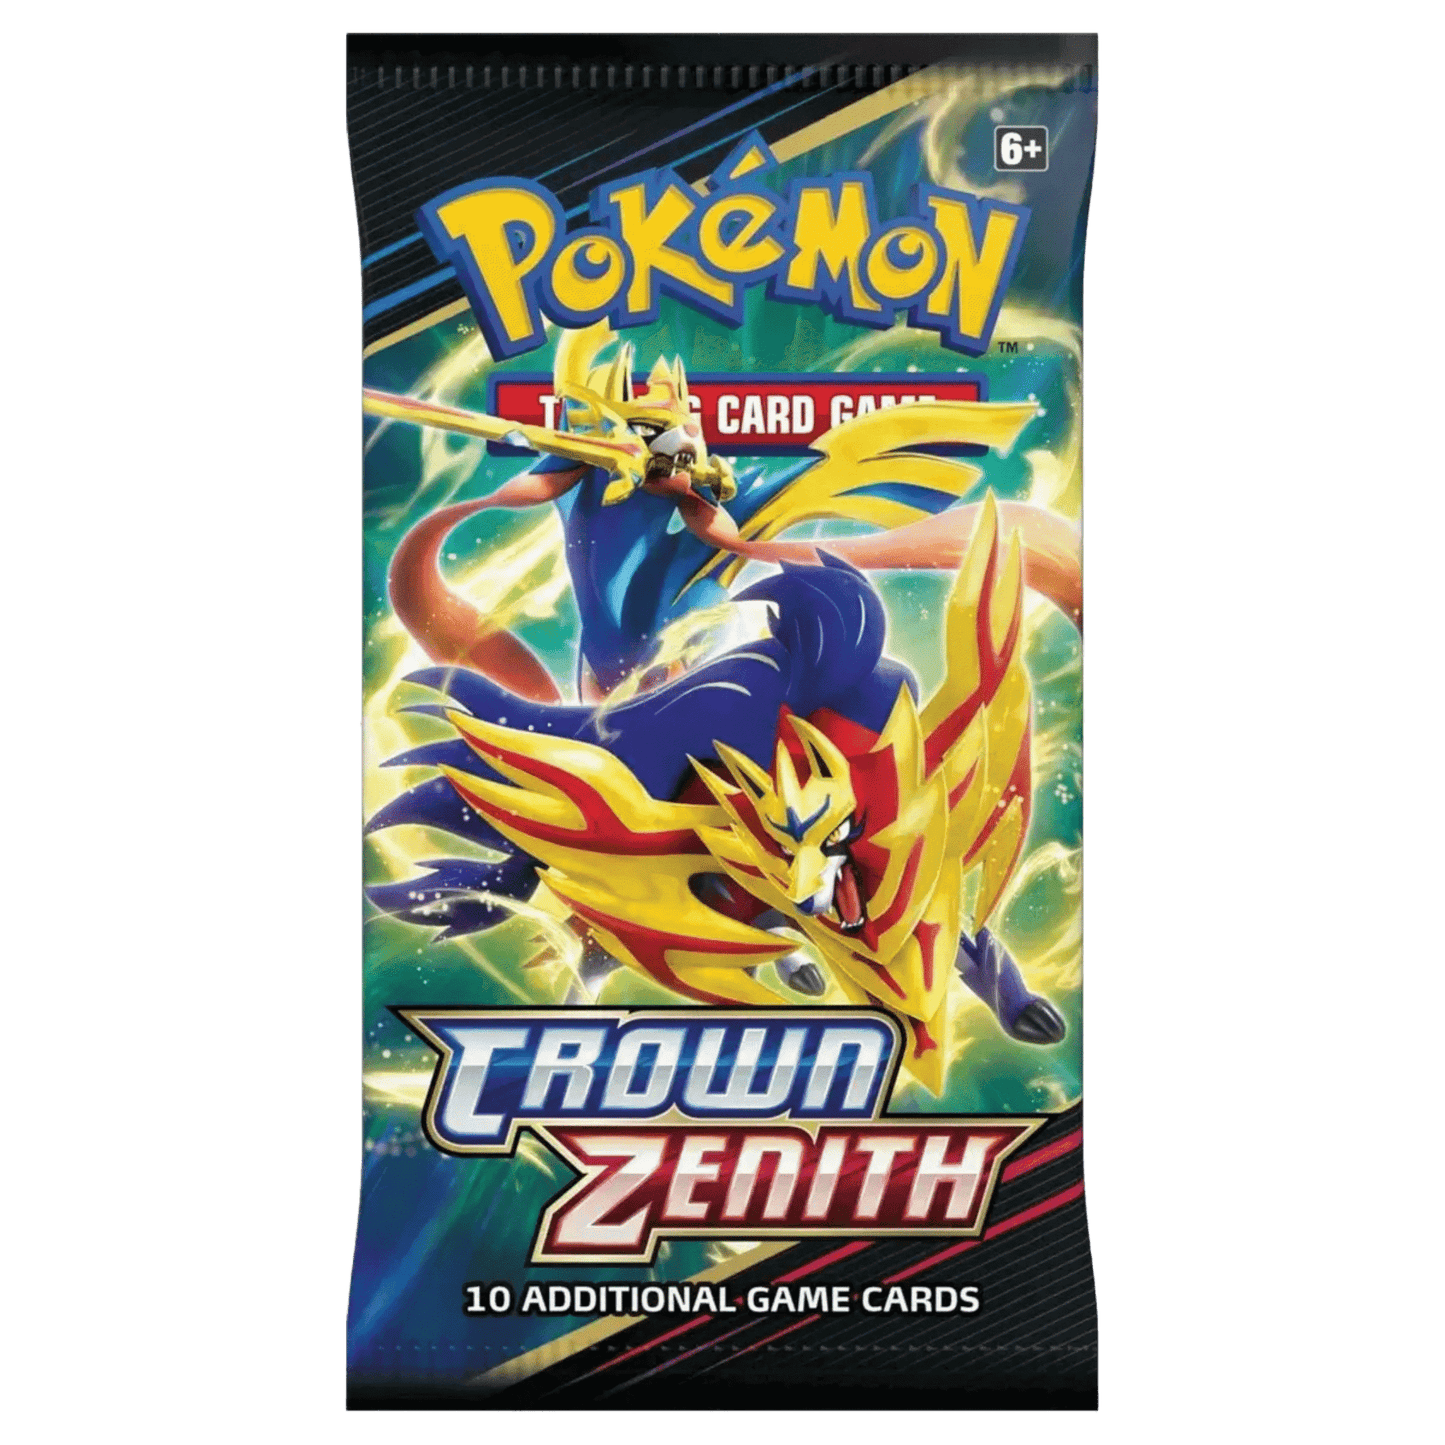 Pokémon: Crown Zenith Booster Pack